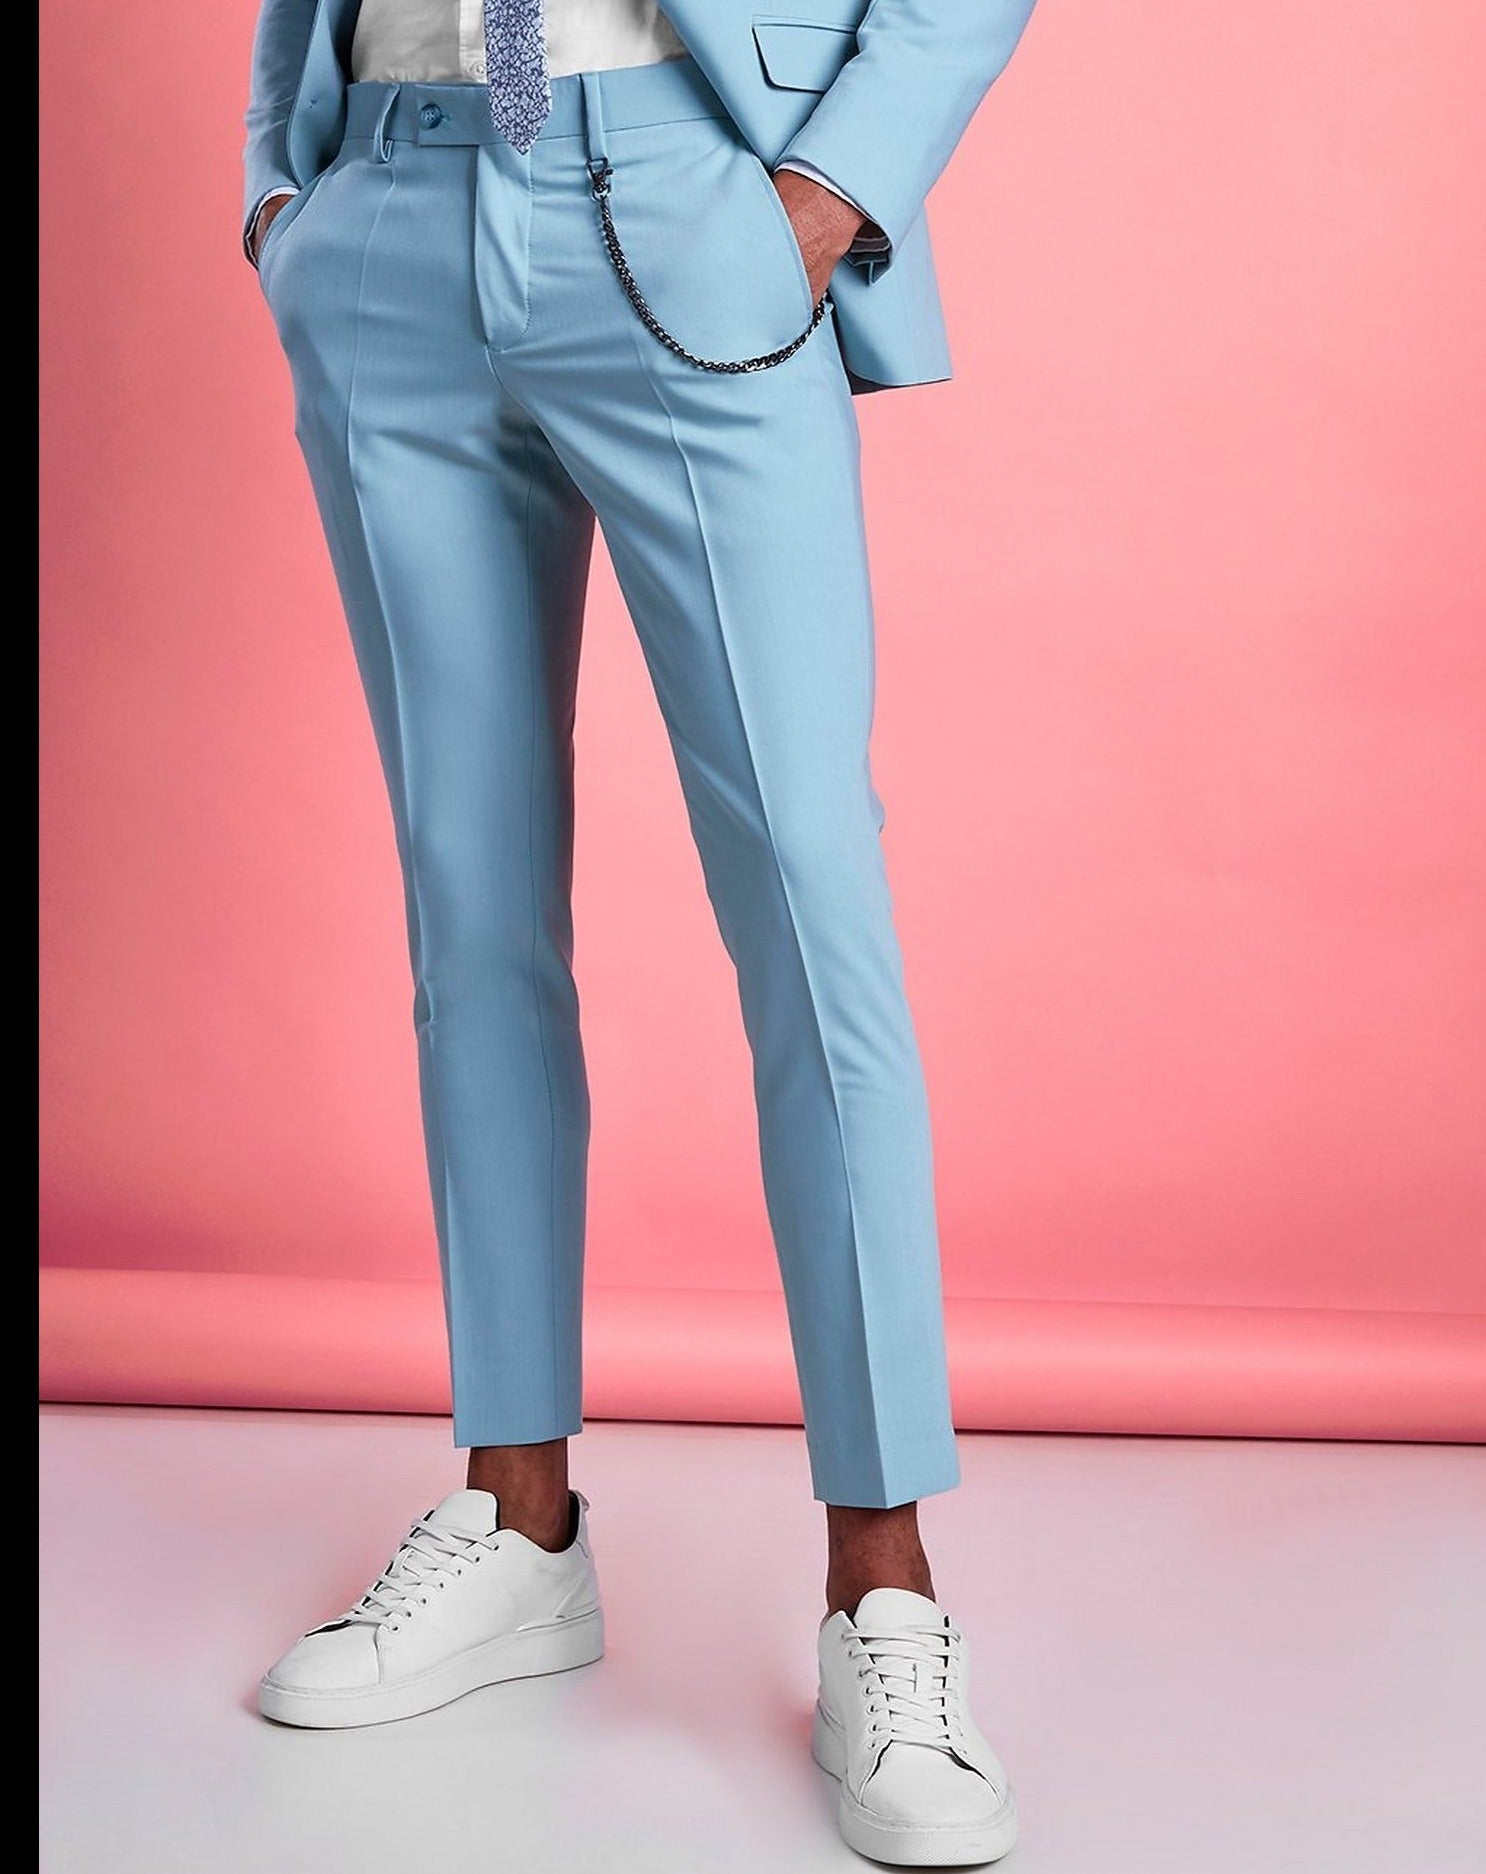 Men Khaki Smart Fit Mid Rise Formal Trouser